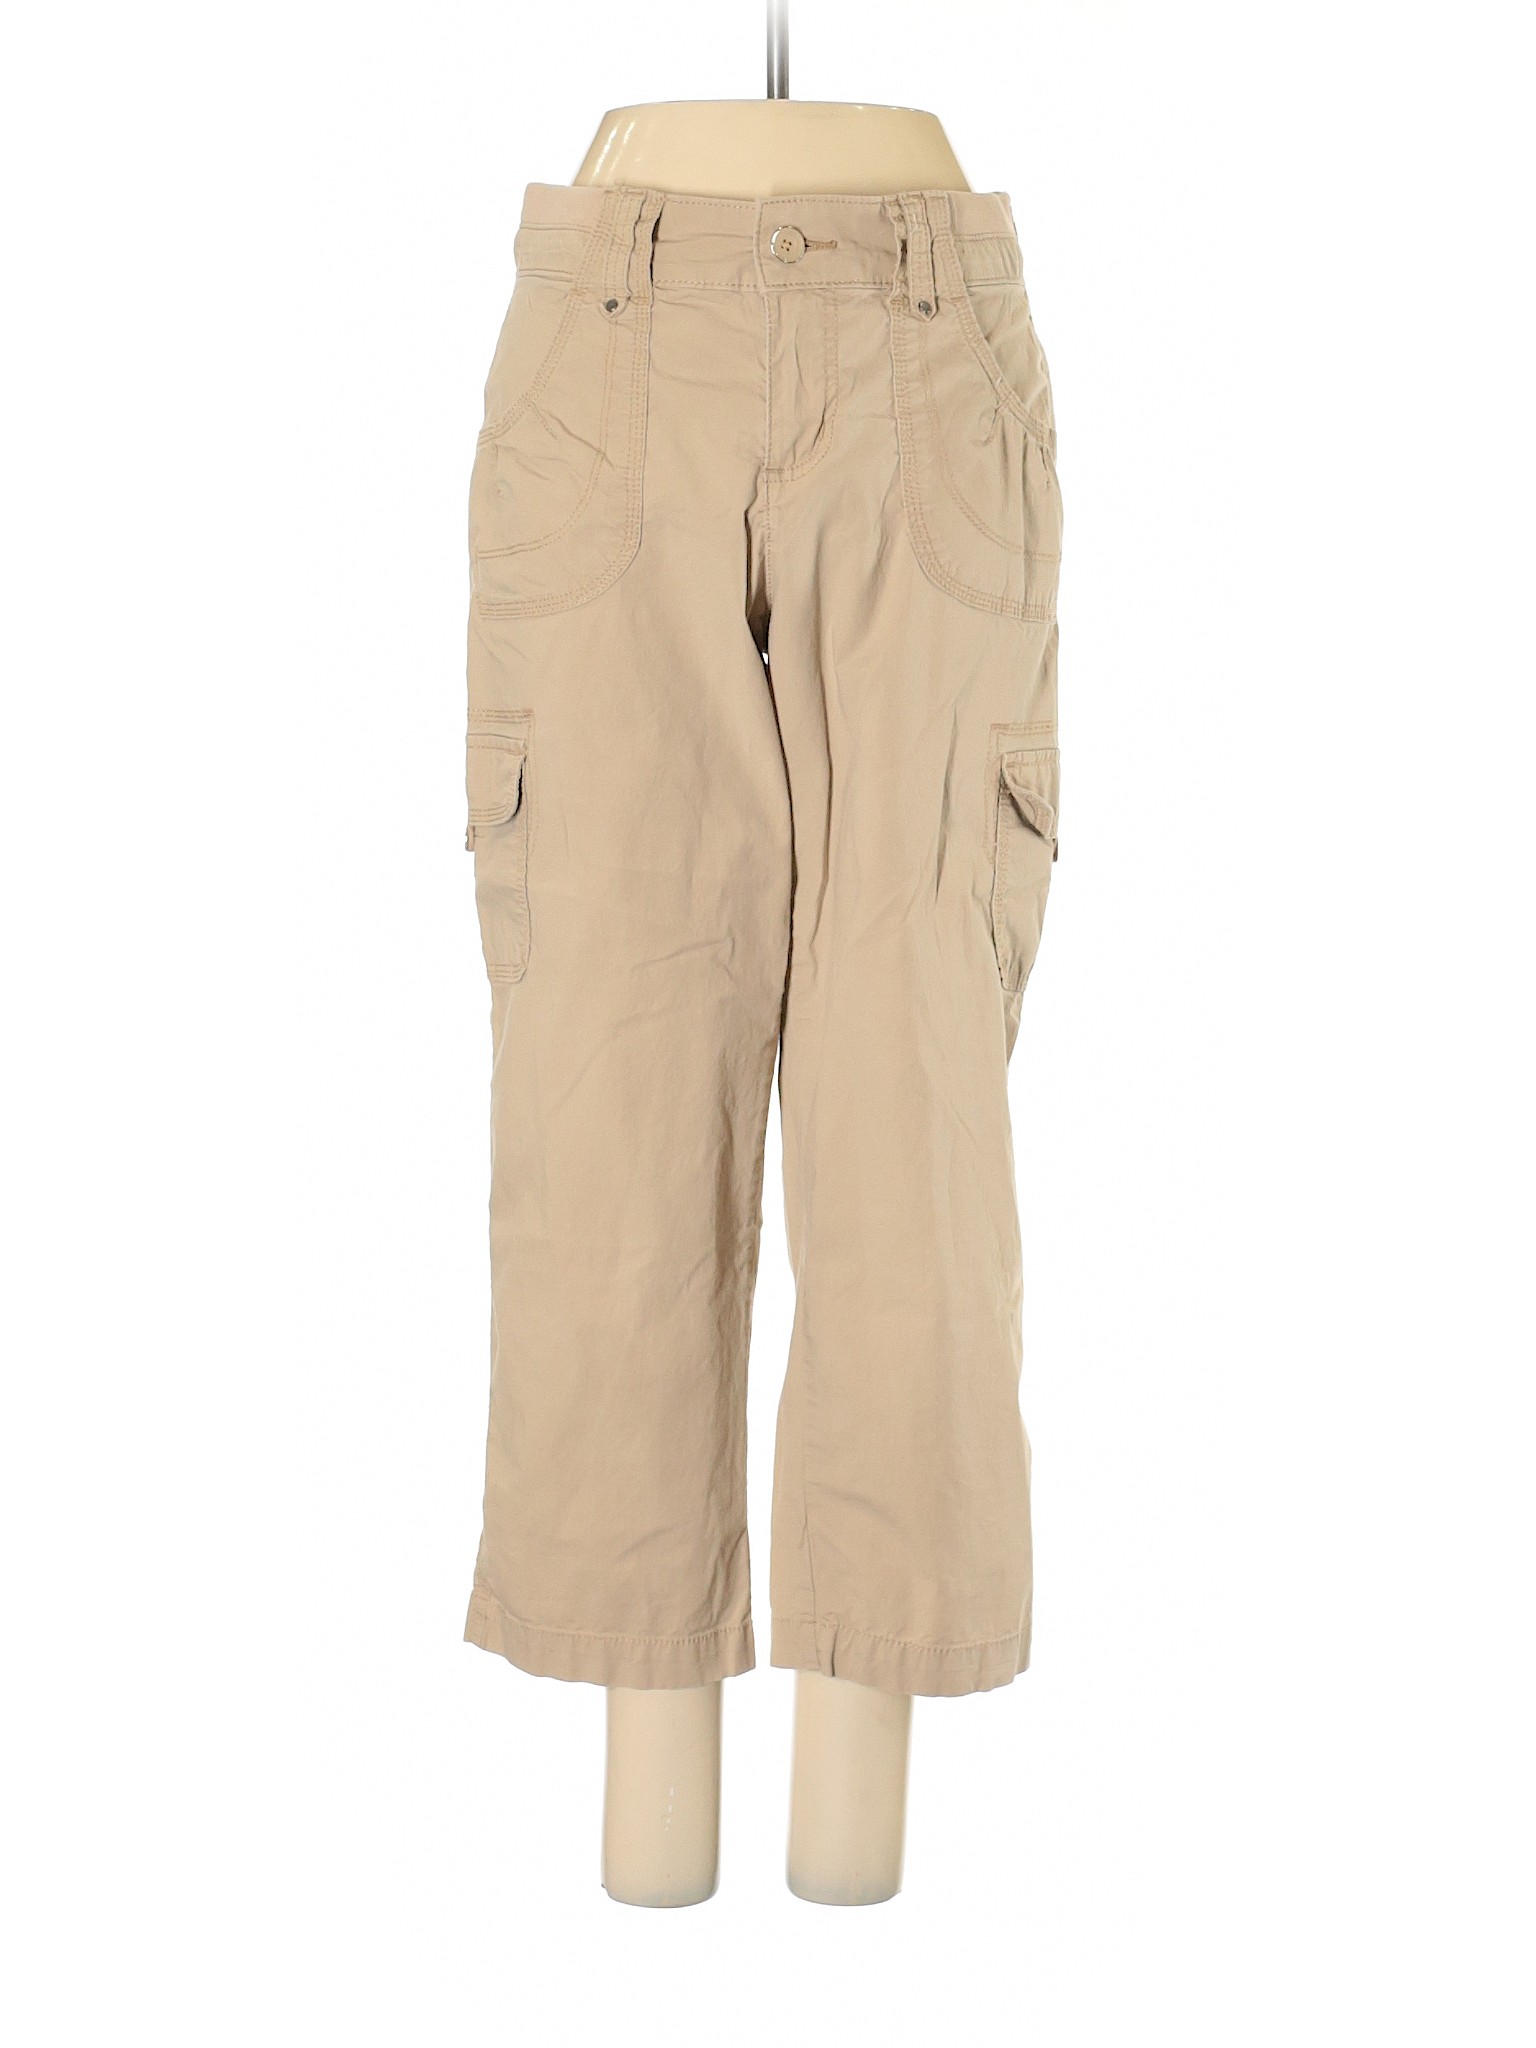 Lee Women Brown Cargo Pants 4 | eBay